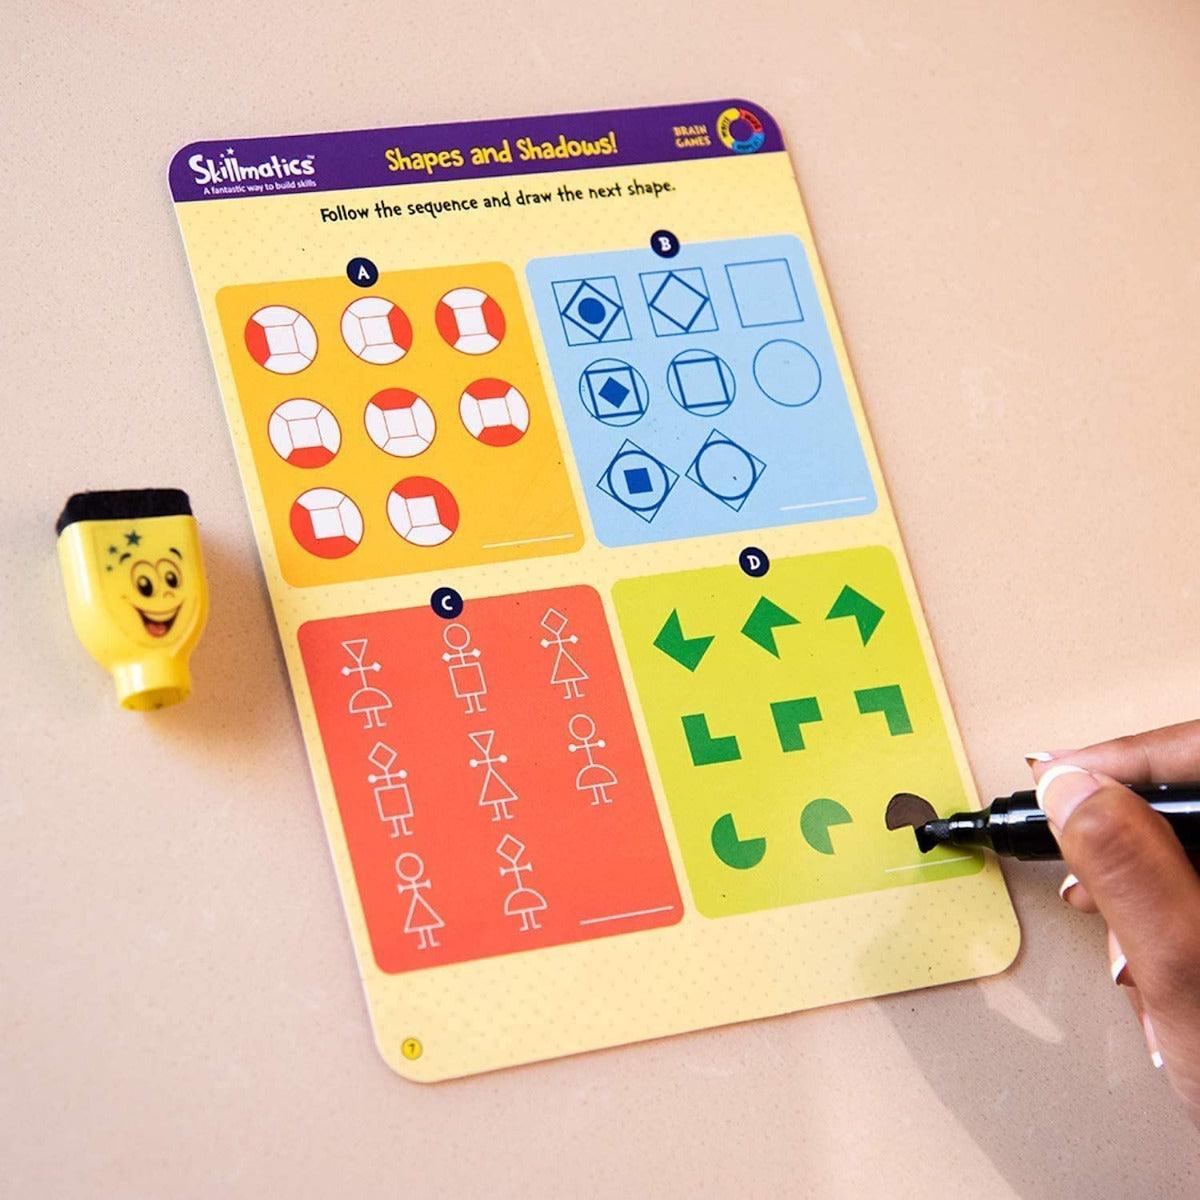 Skillmatics Brain Games | Reusable Activity Mats | Educational Game with Marker Pen